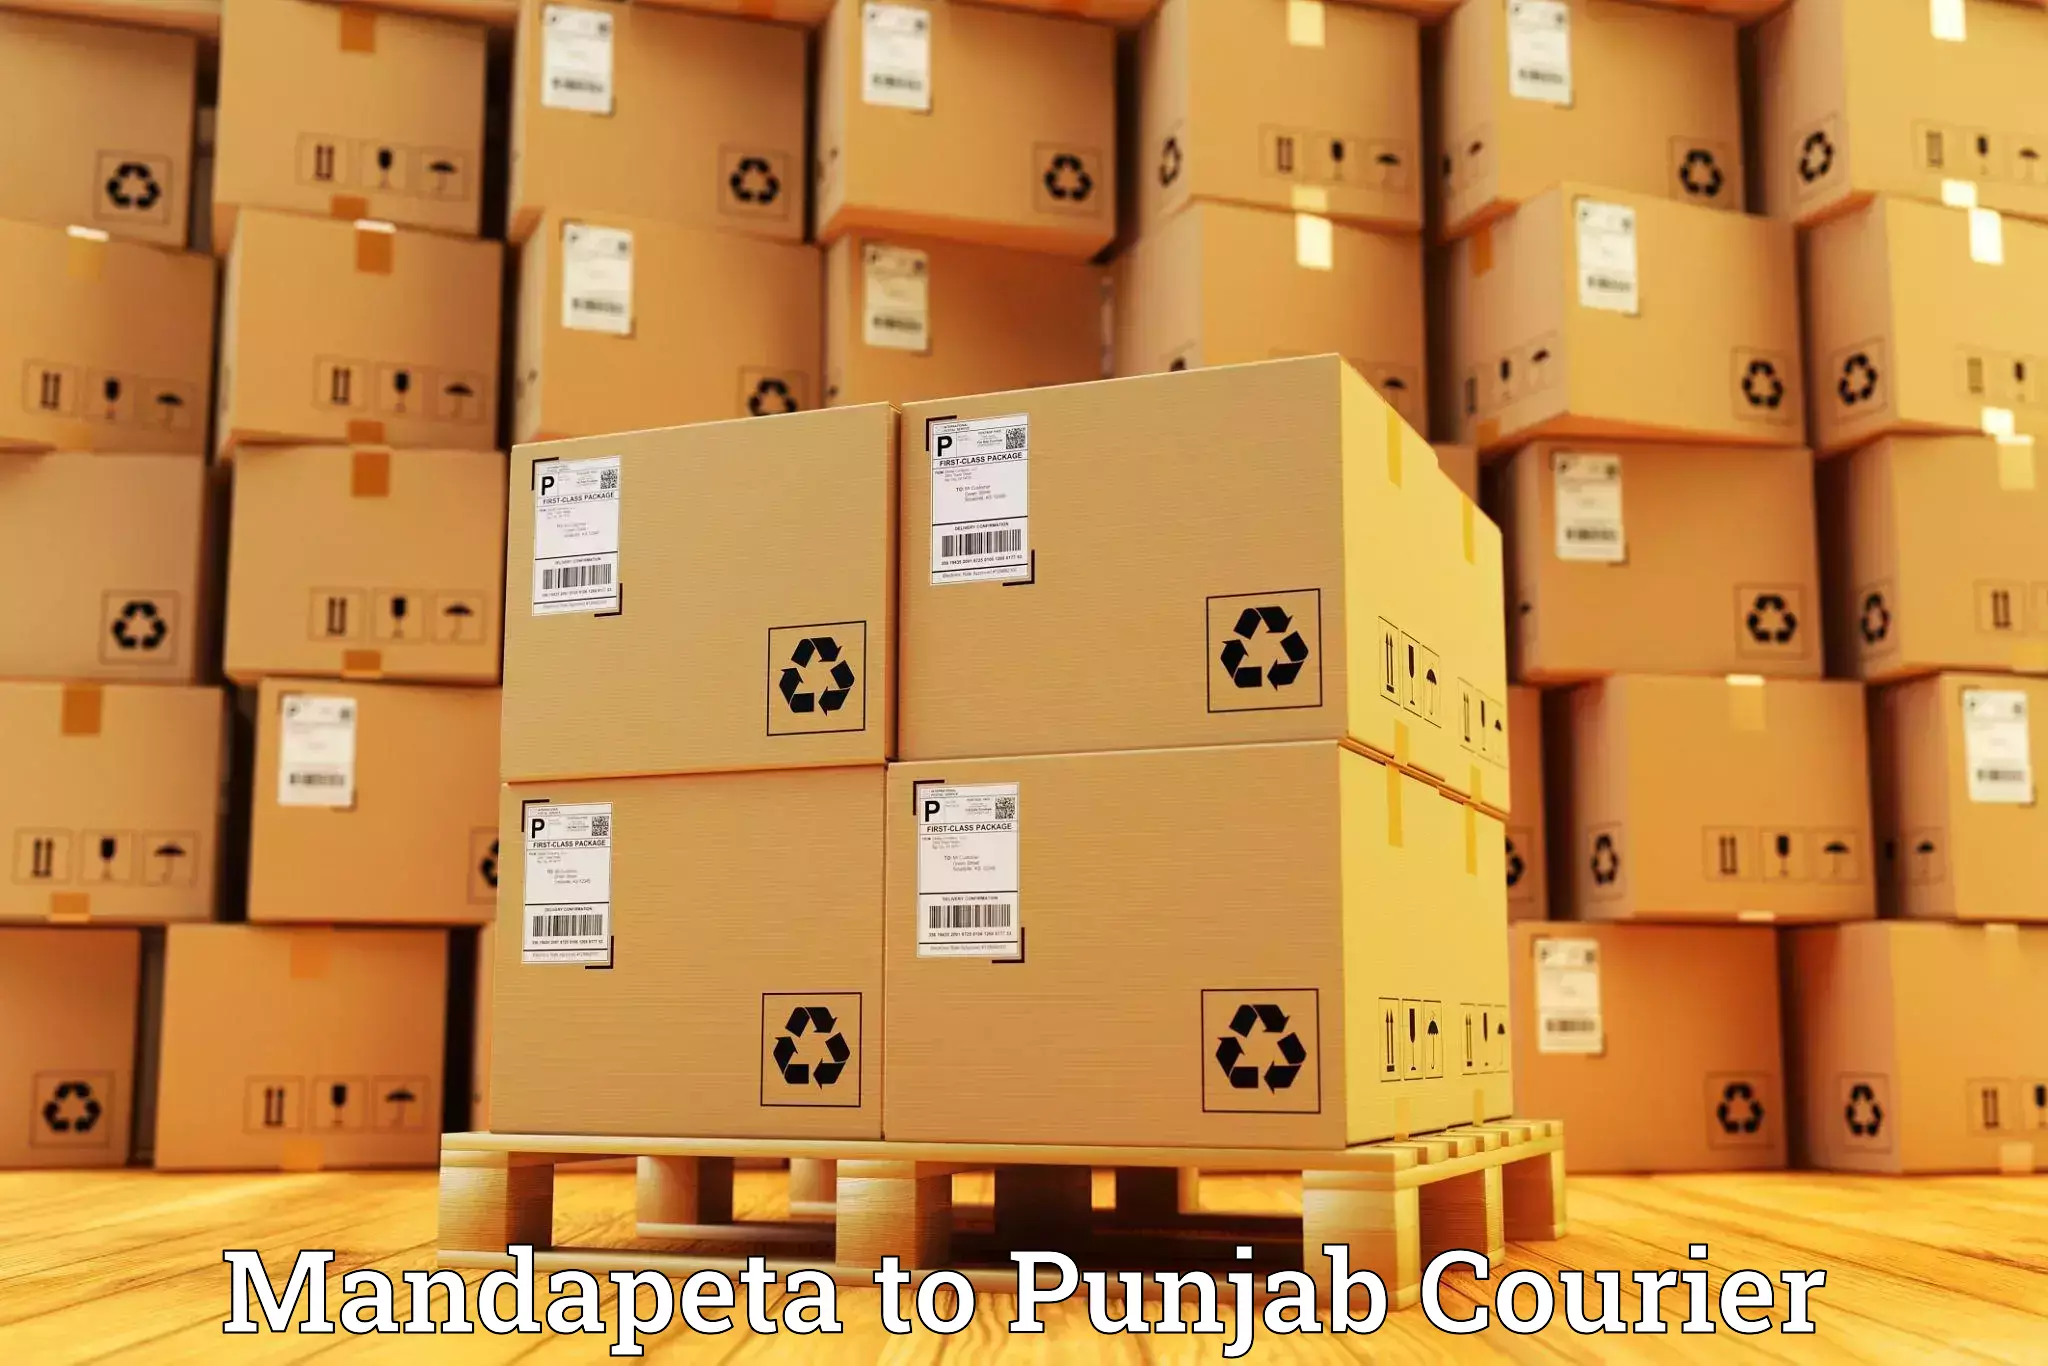 Courier service efficiency Mandapeta to Zirakpur